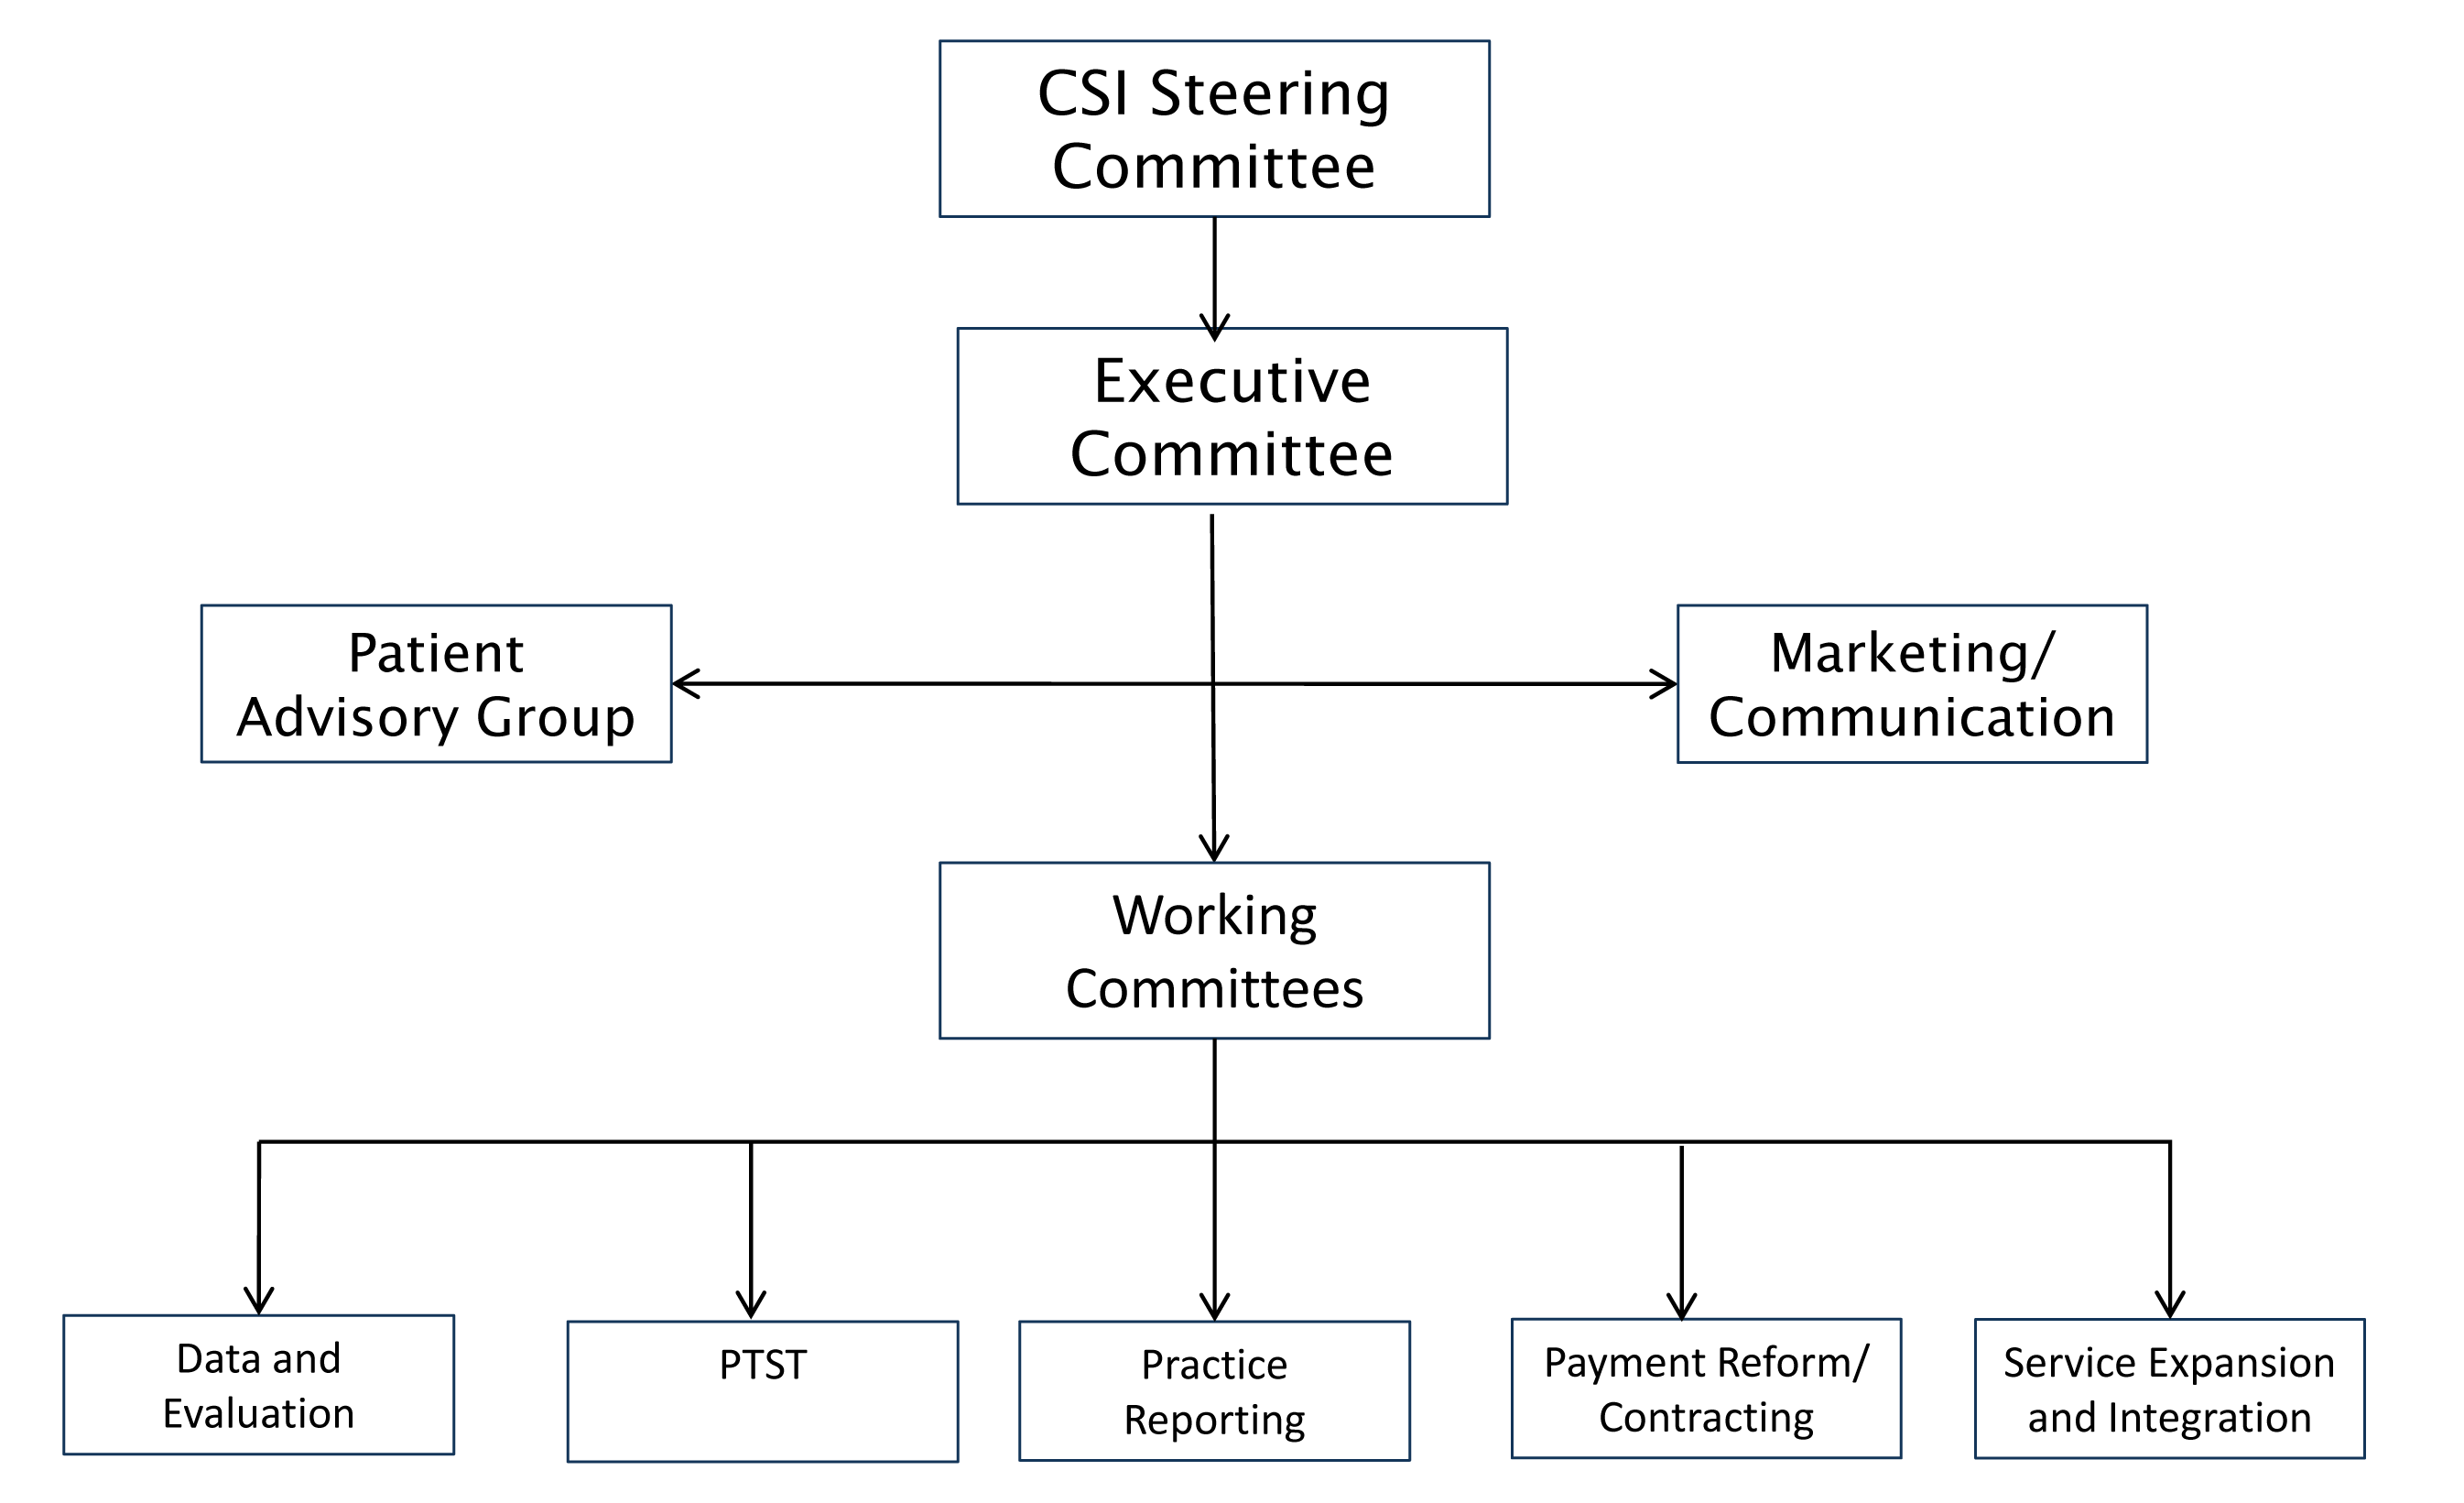 Appendix 2: CSI Governance Structure